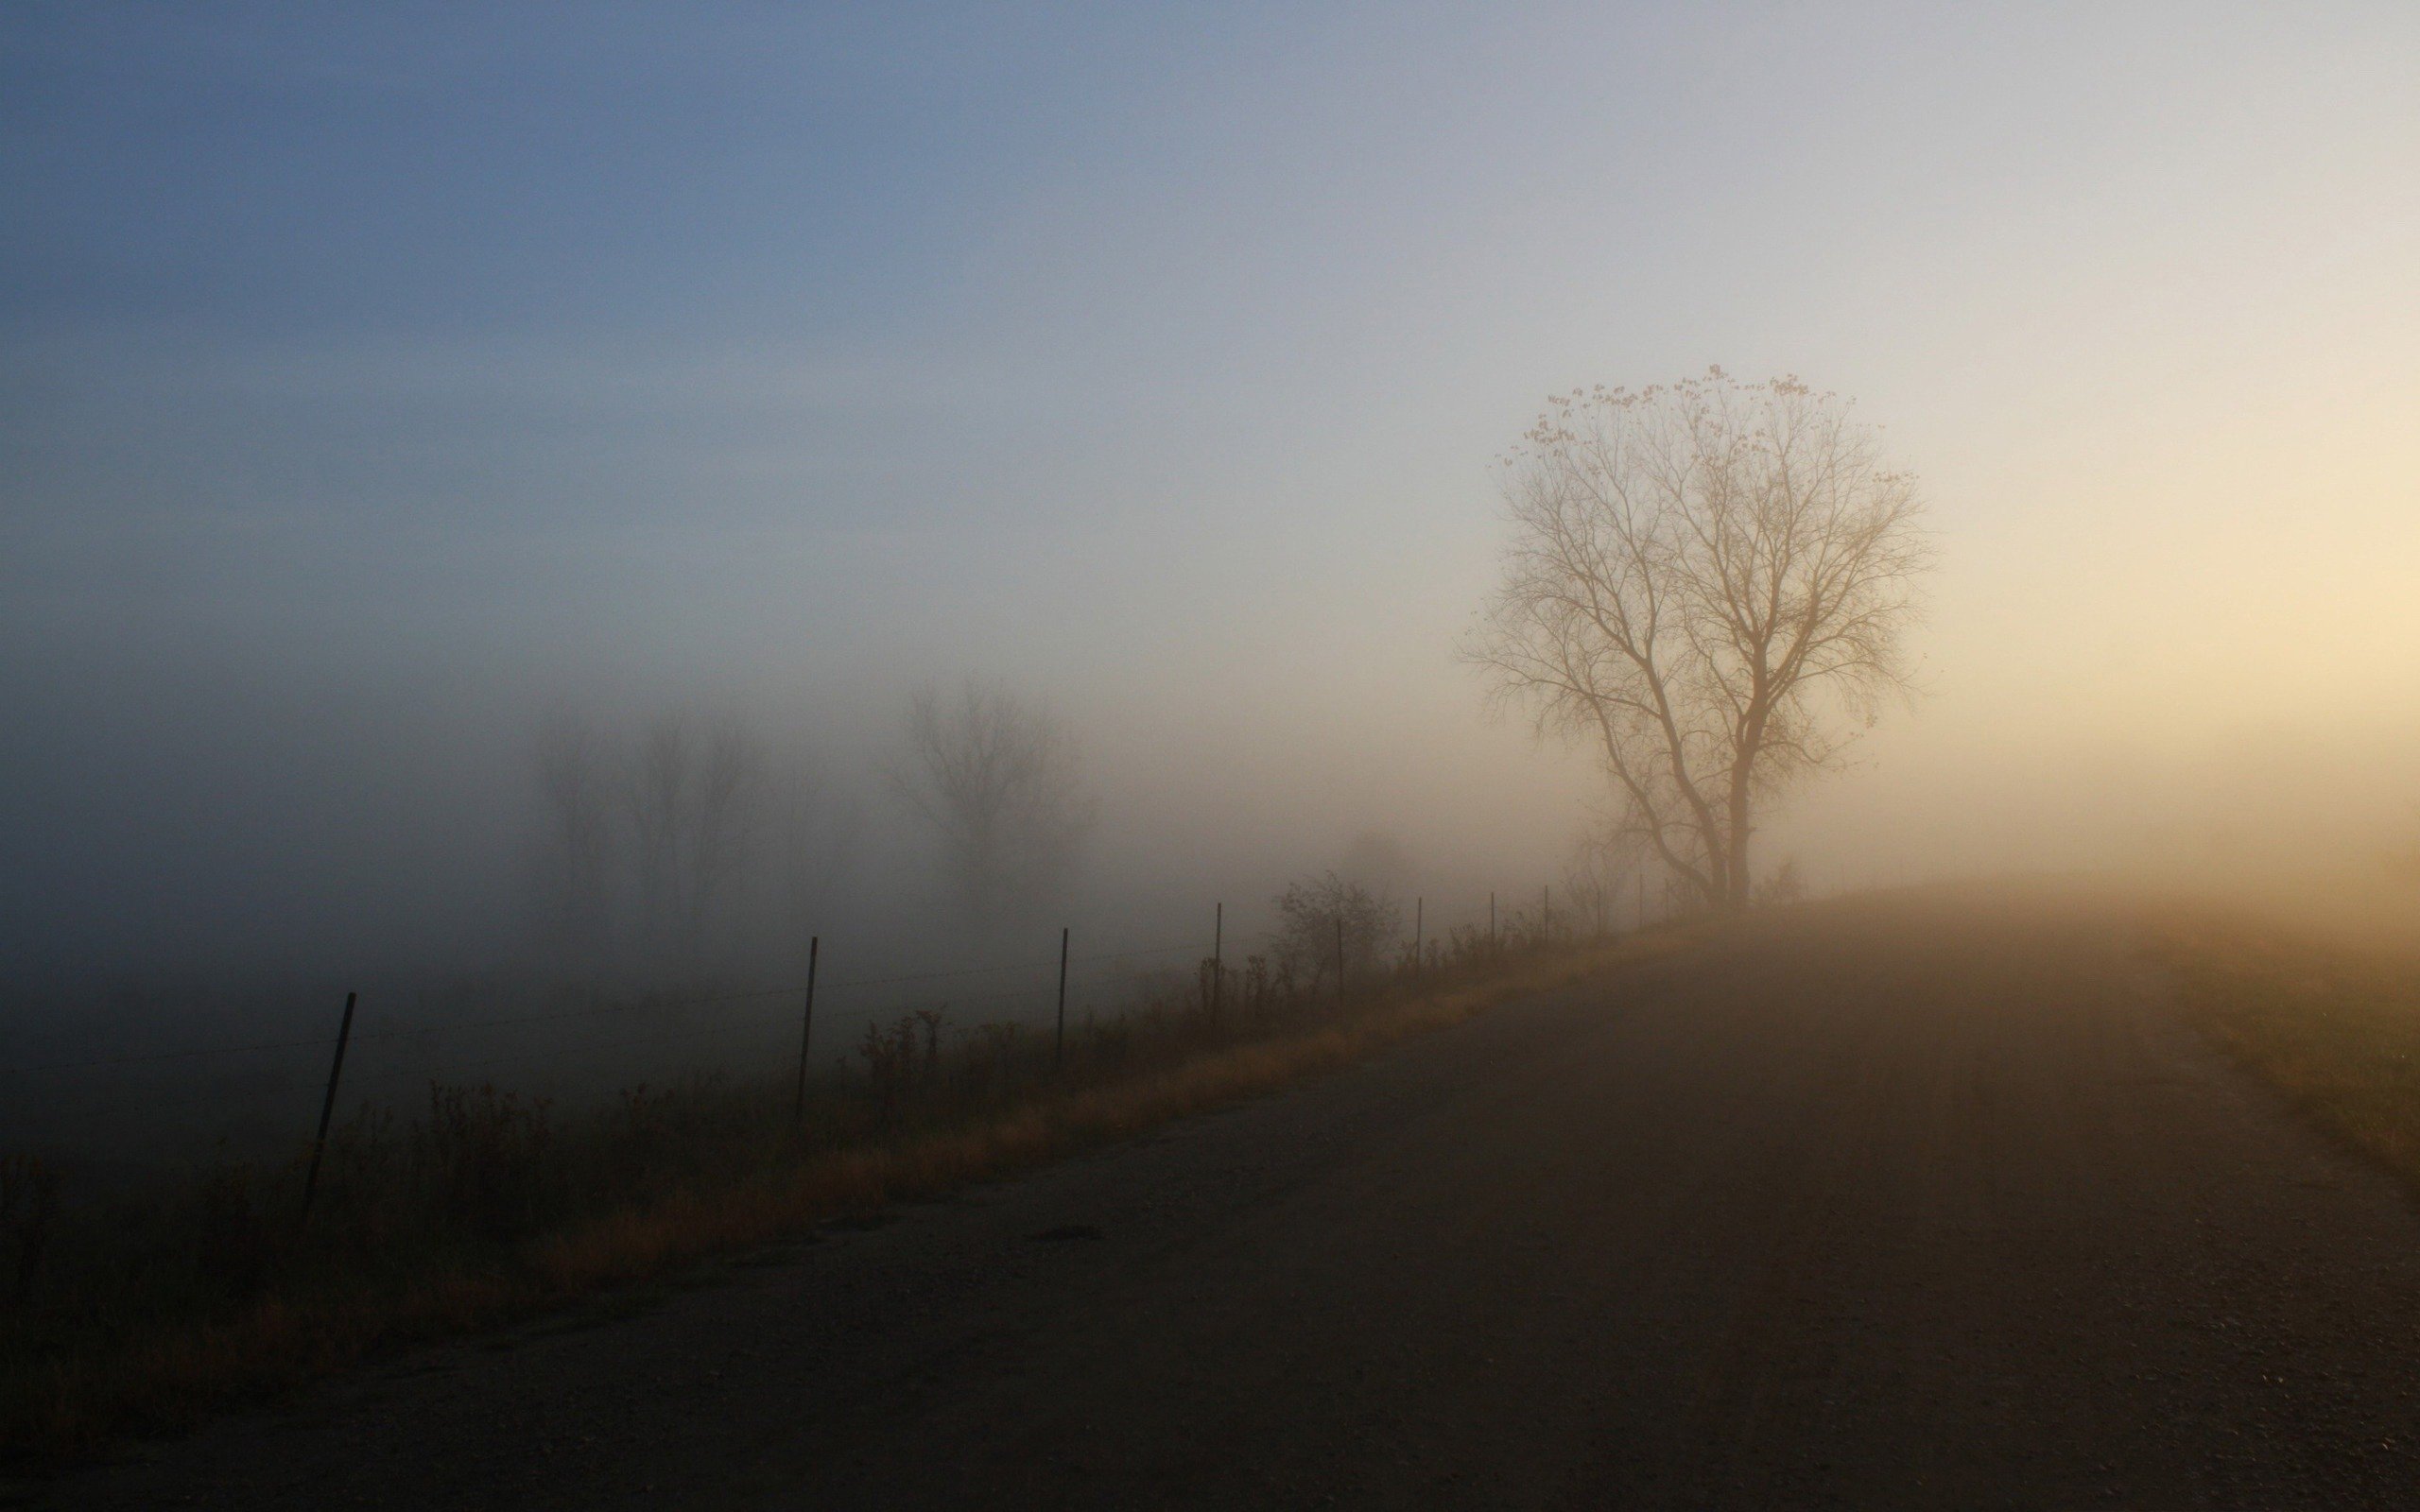 Условиях сильного тумана. Дорога в тумане. Туманный пейзаж. Туманное утро. Сильный туман на дороге.